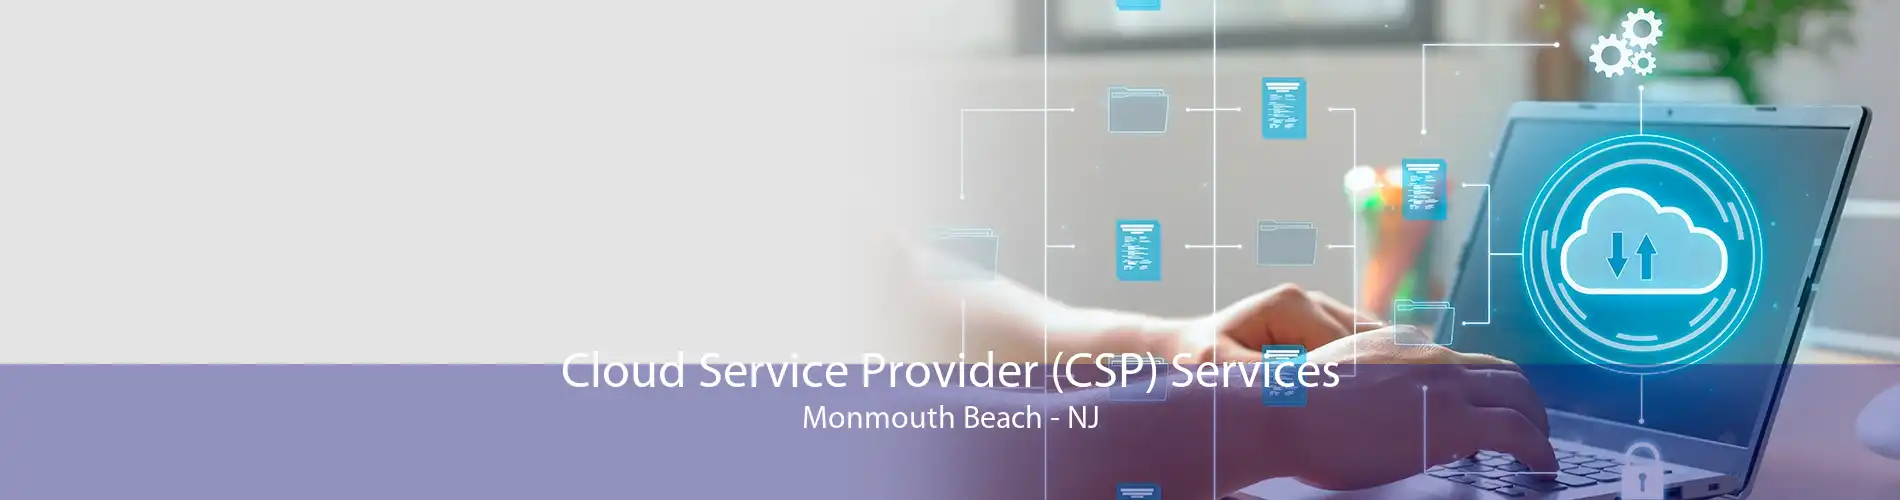 Cloud Service Provider (CSP) Services Monmouth Beach - NJ